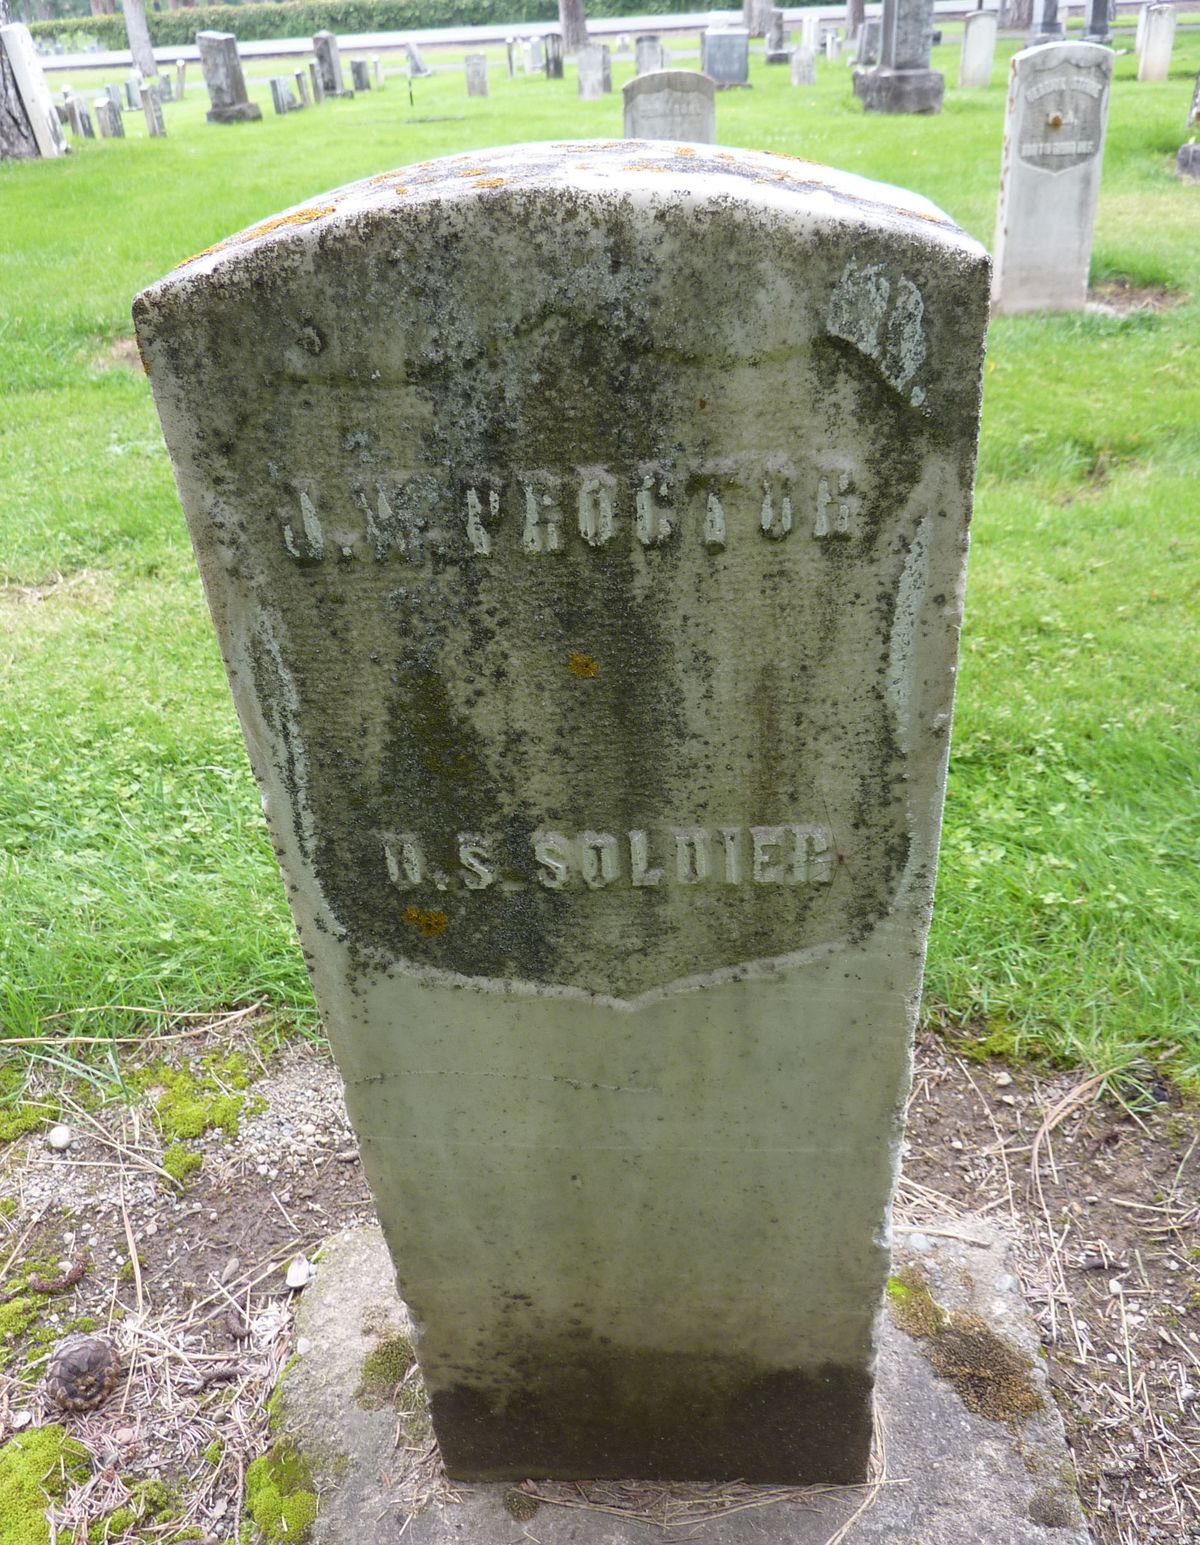 A simple gravestone in memory of J.W. Proctor at Greenwood Memorial Terrace.